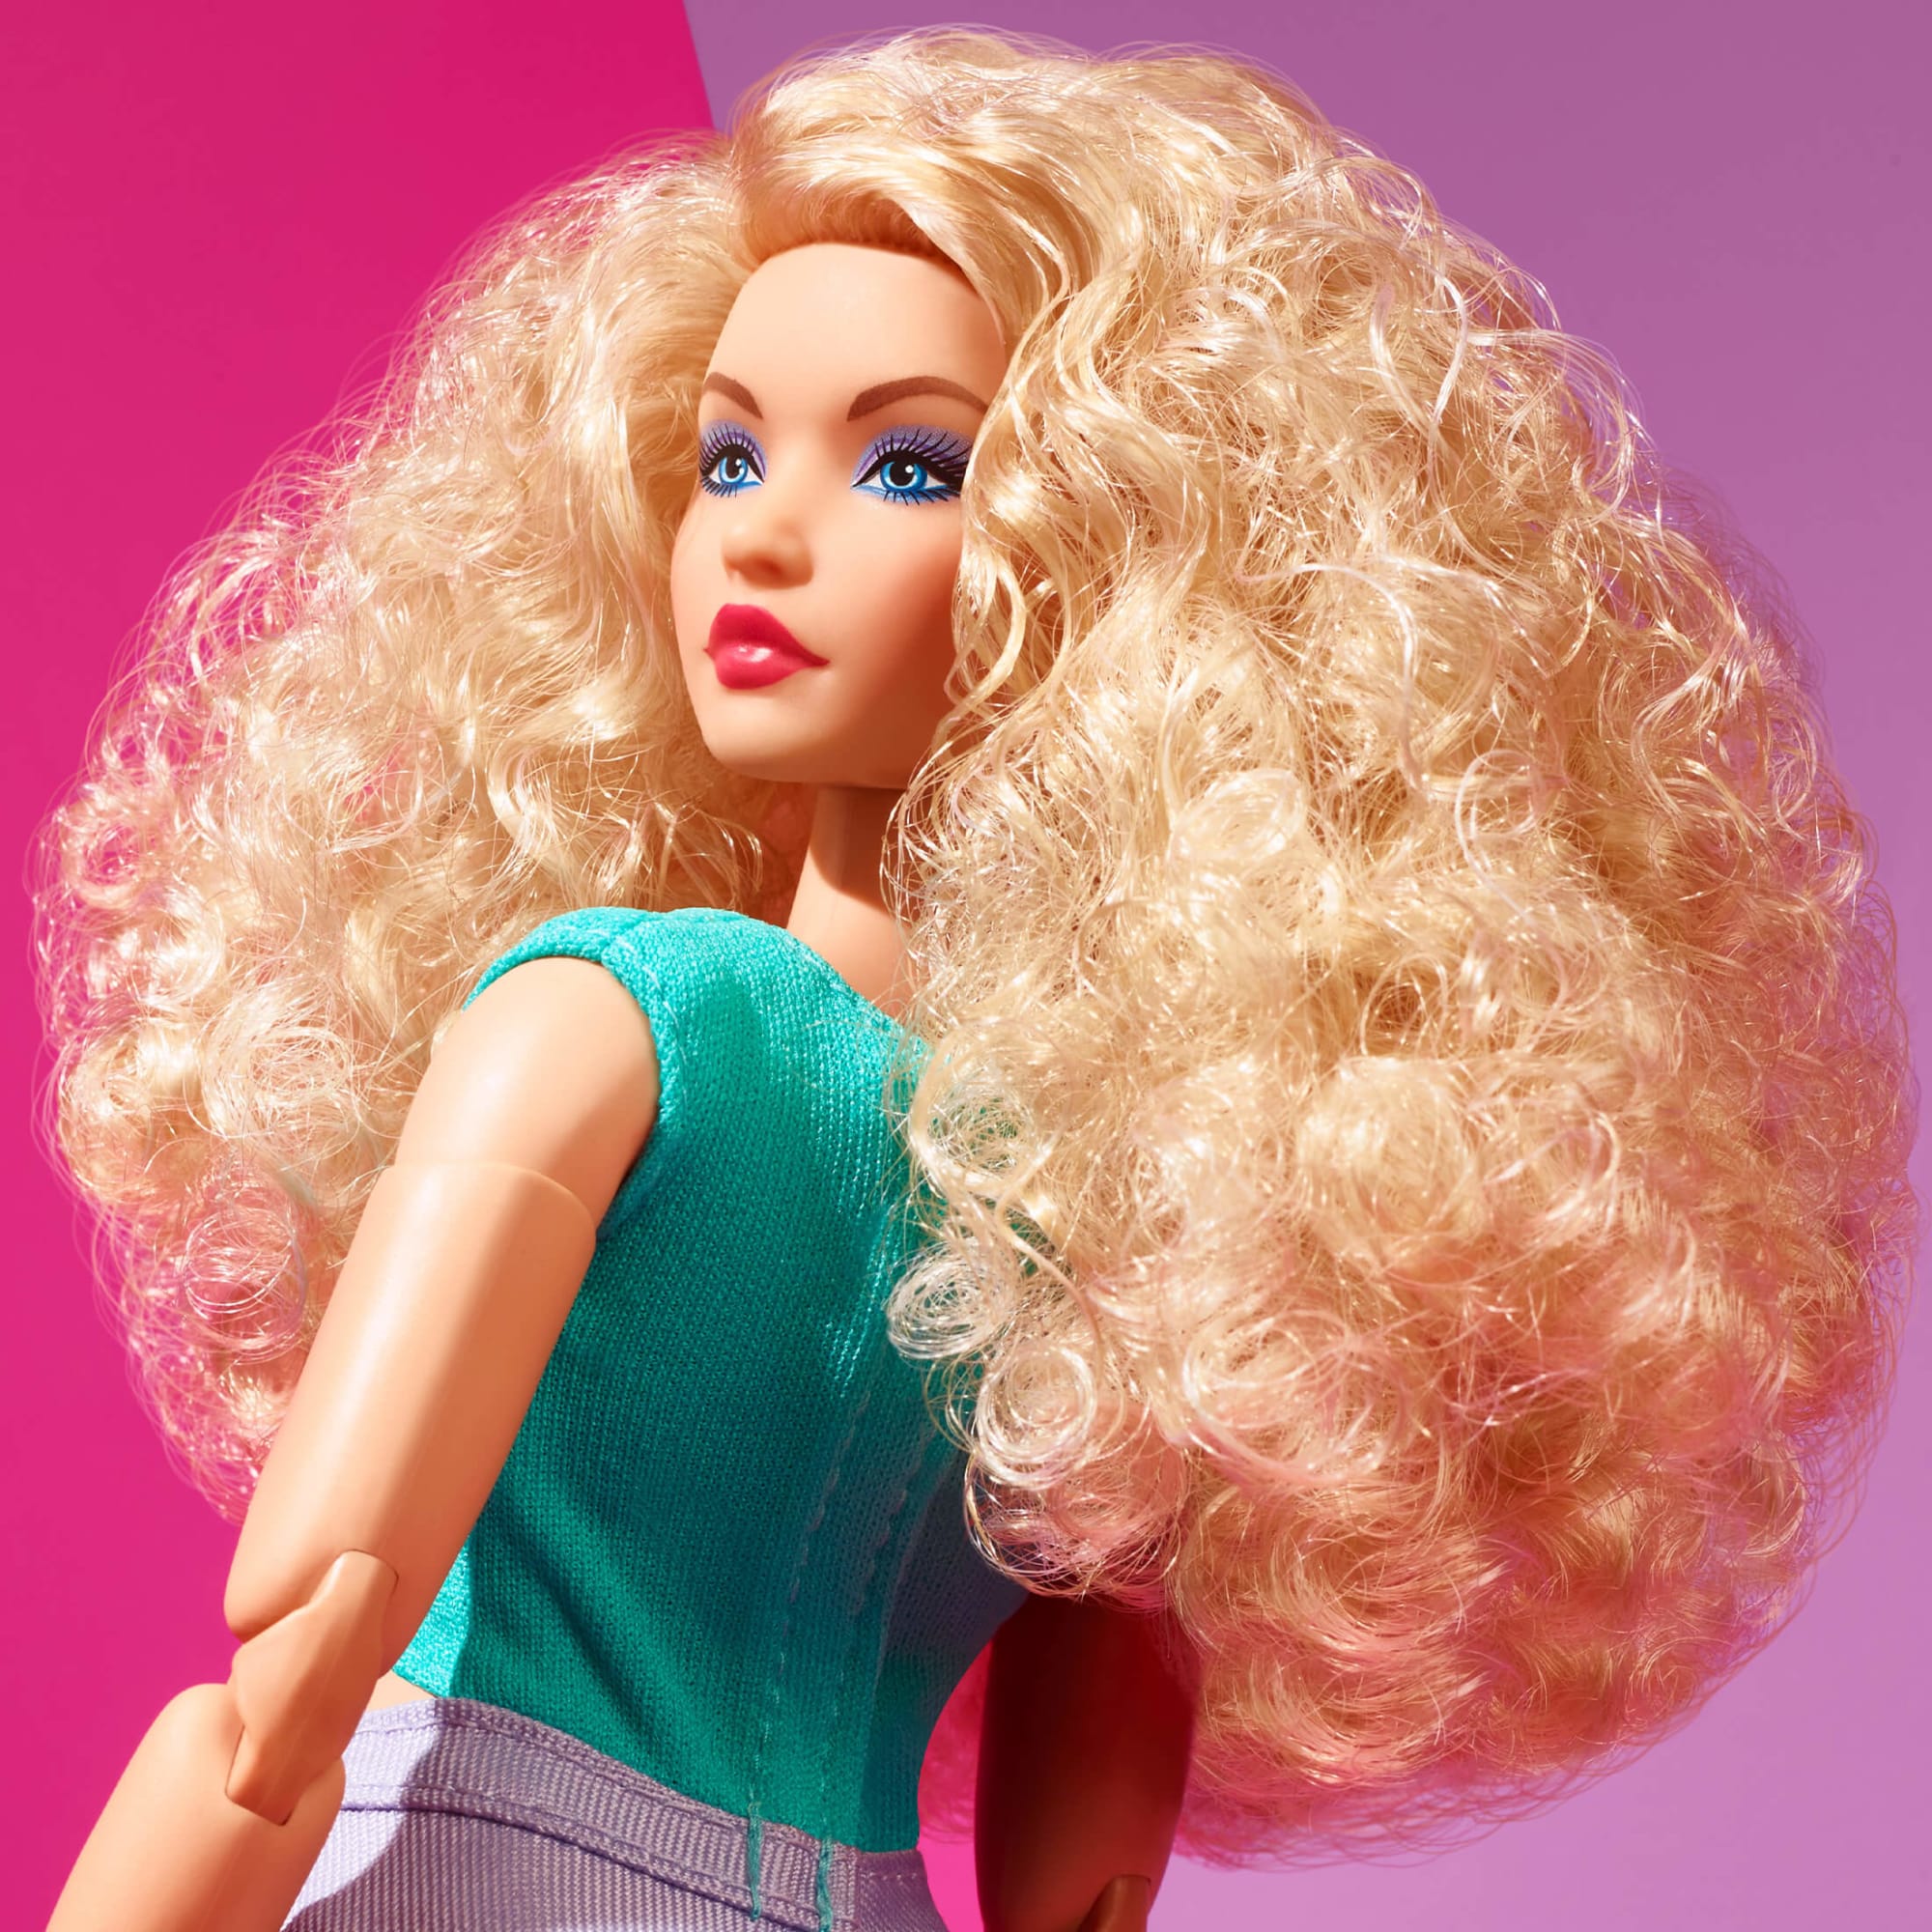 Barbie Looks Doll (Curvy, Curly Blonde Hair)